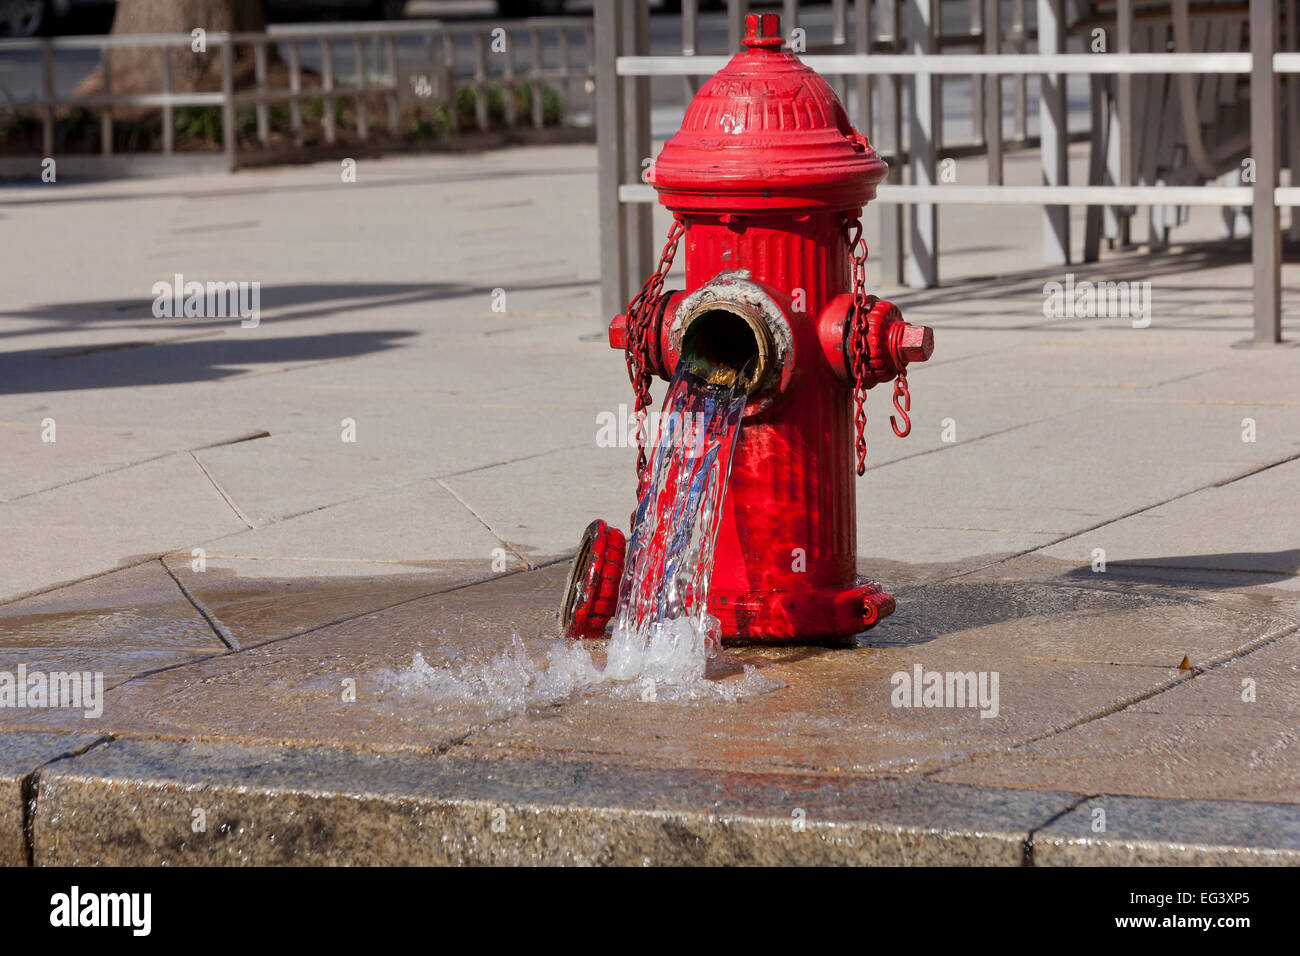 Open fire hydrant - USA Stock Photo